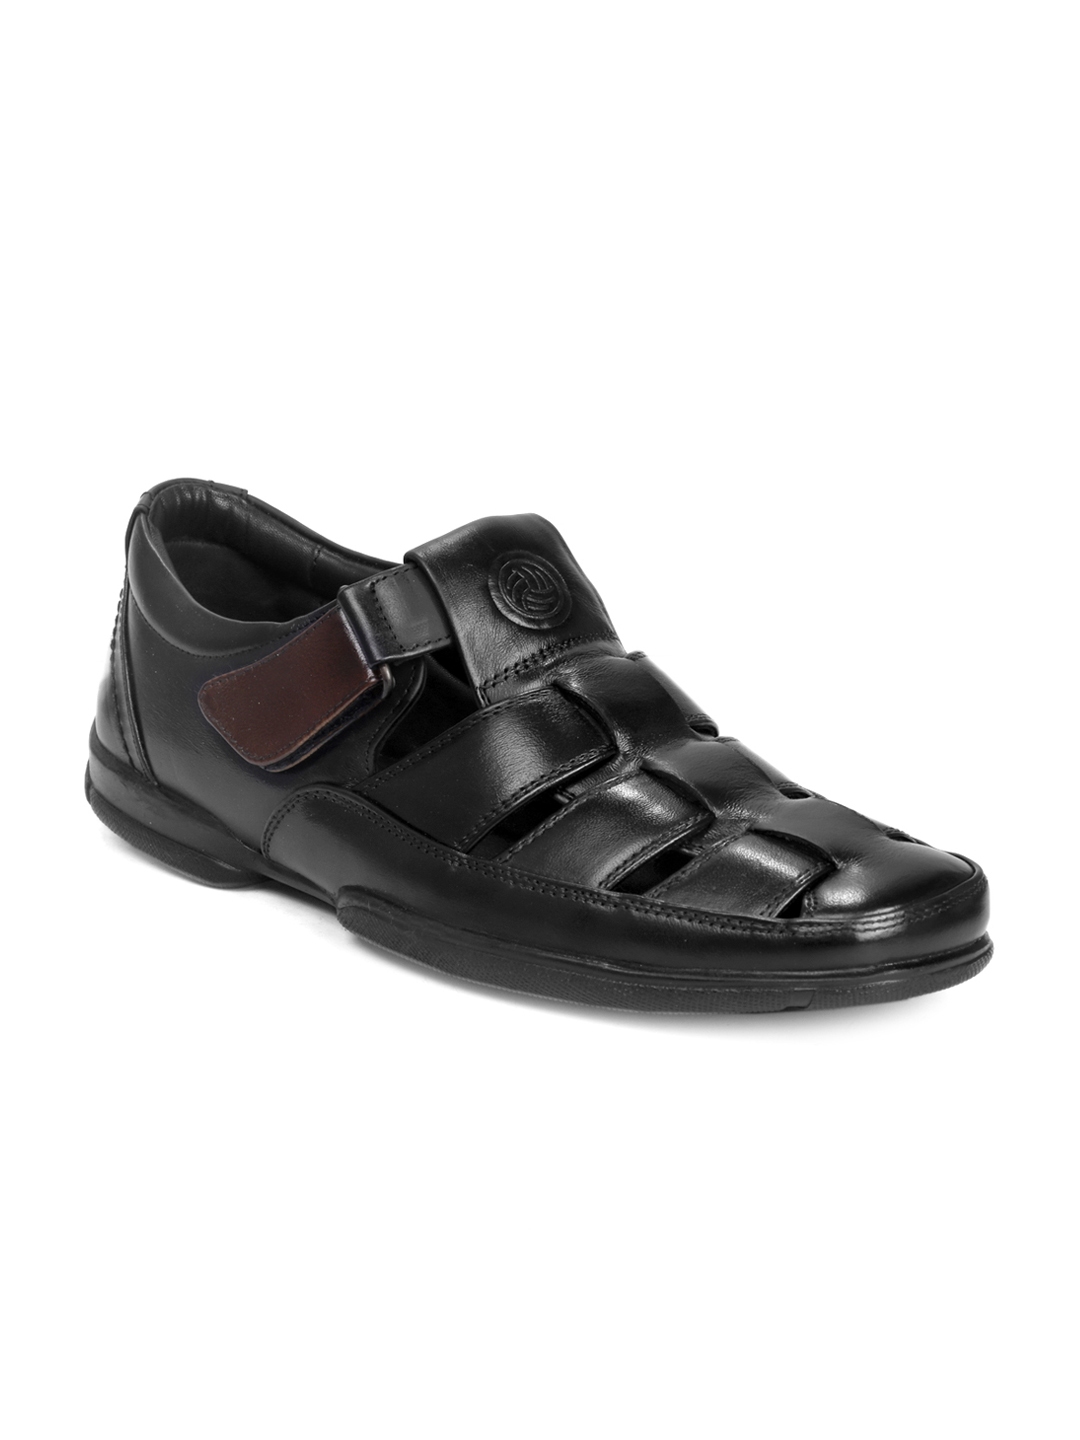 Buy Bacca Bucci Men Black Leather Shoe Style Sandals - Sandals for Men ...